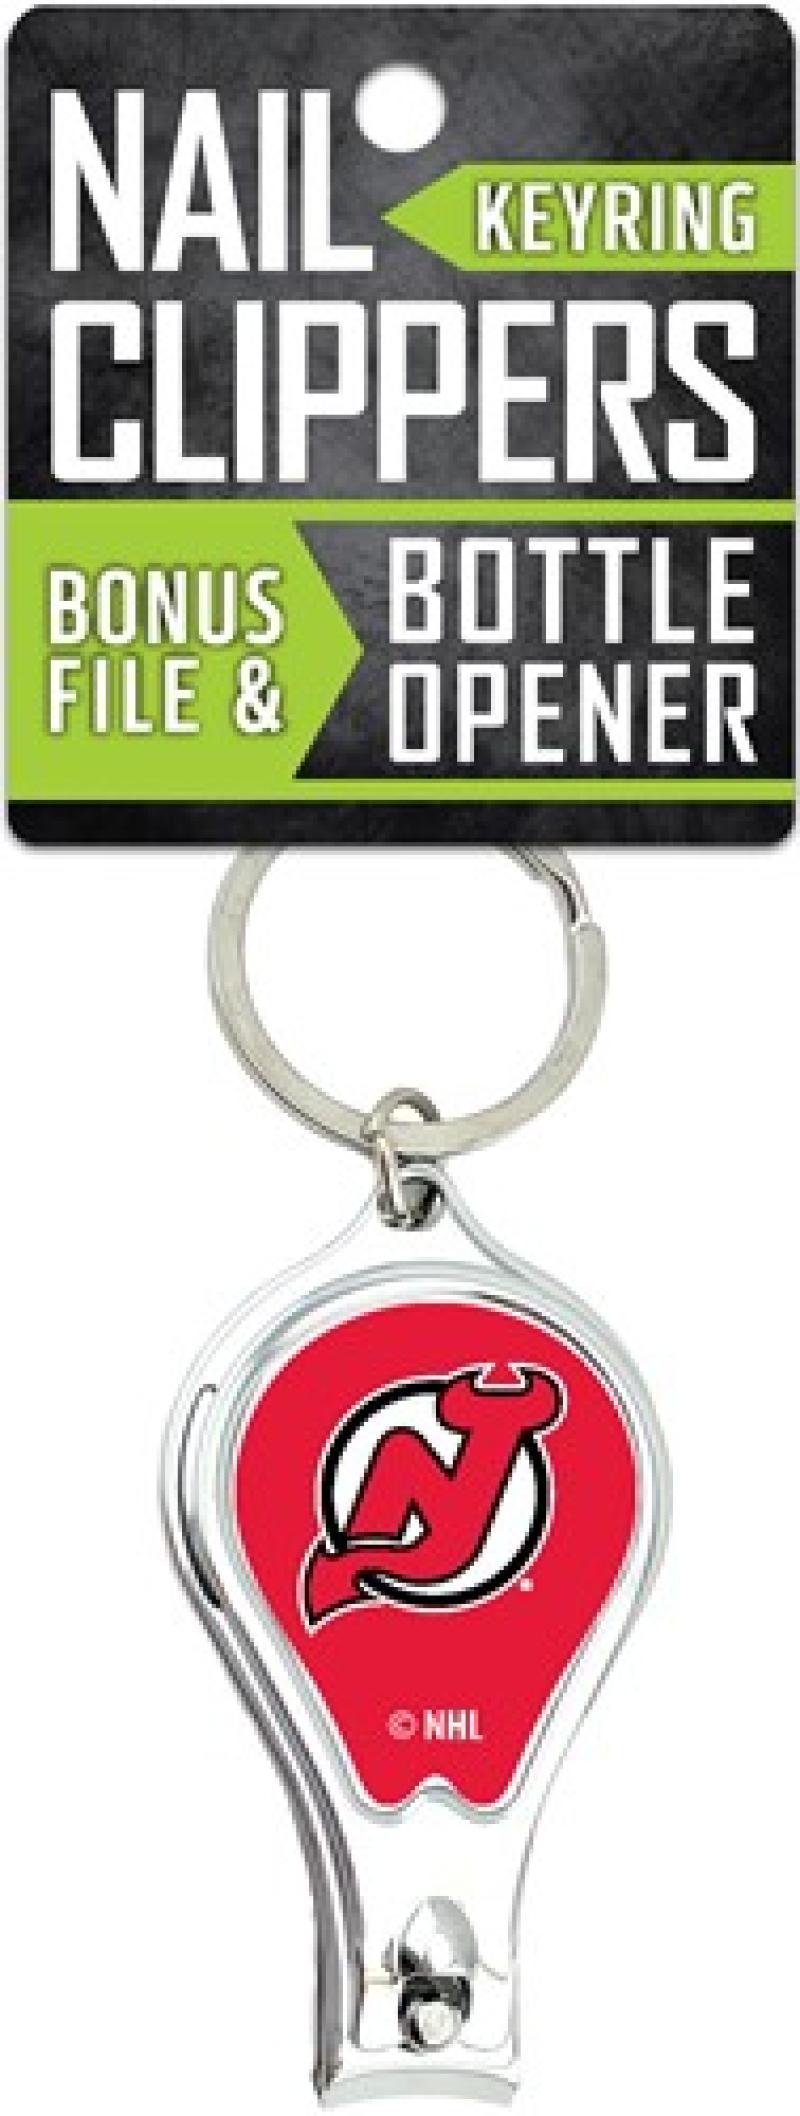 New Jersey Devils Nail Clipper Keyring w/Bonus File & Bottle Opener Image 1